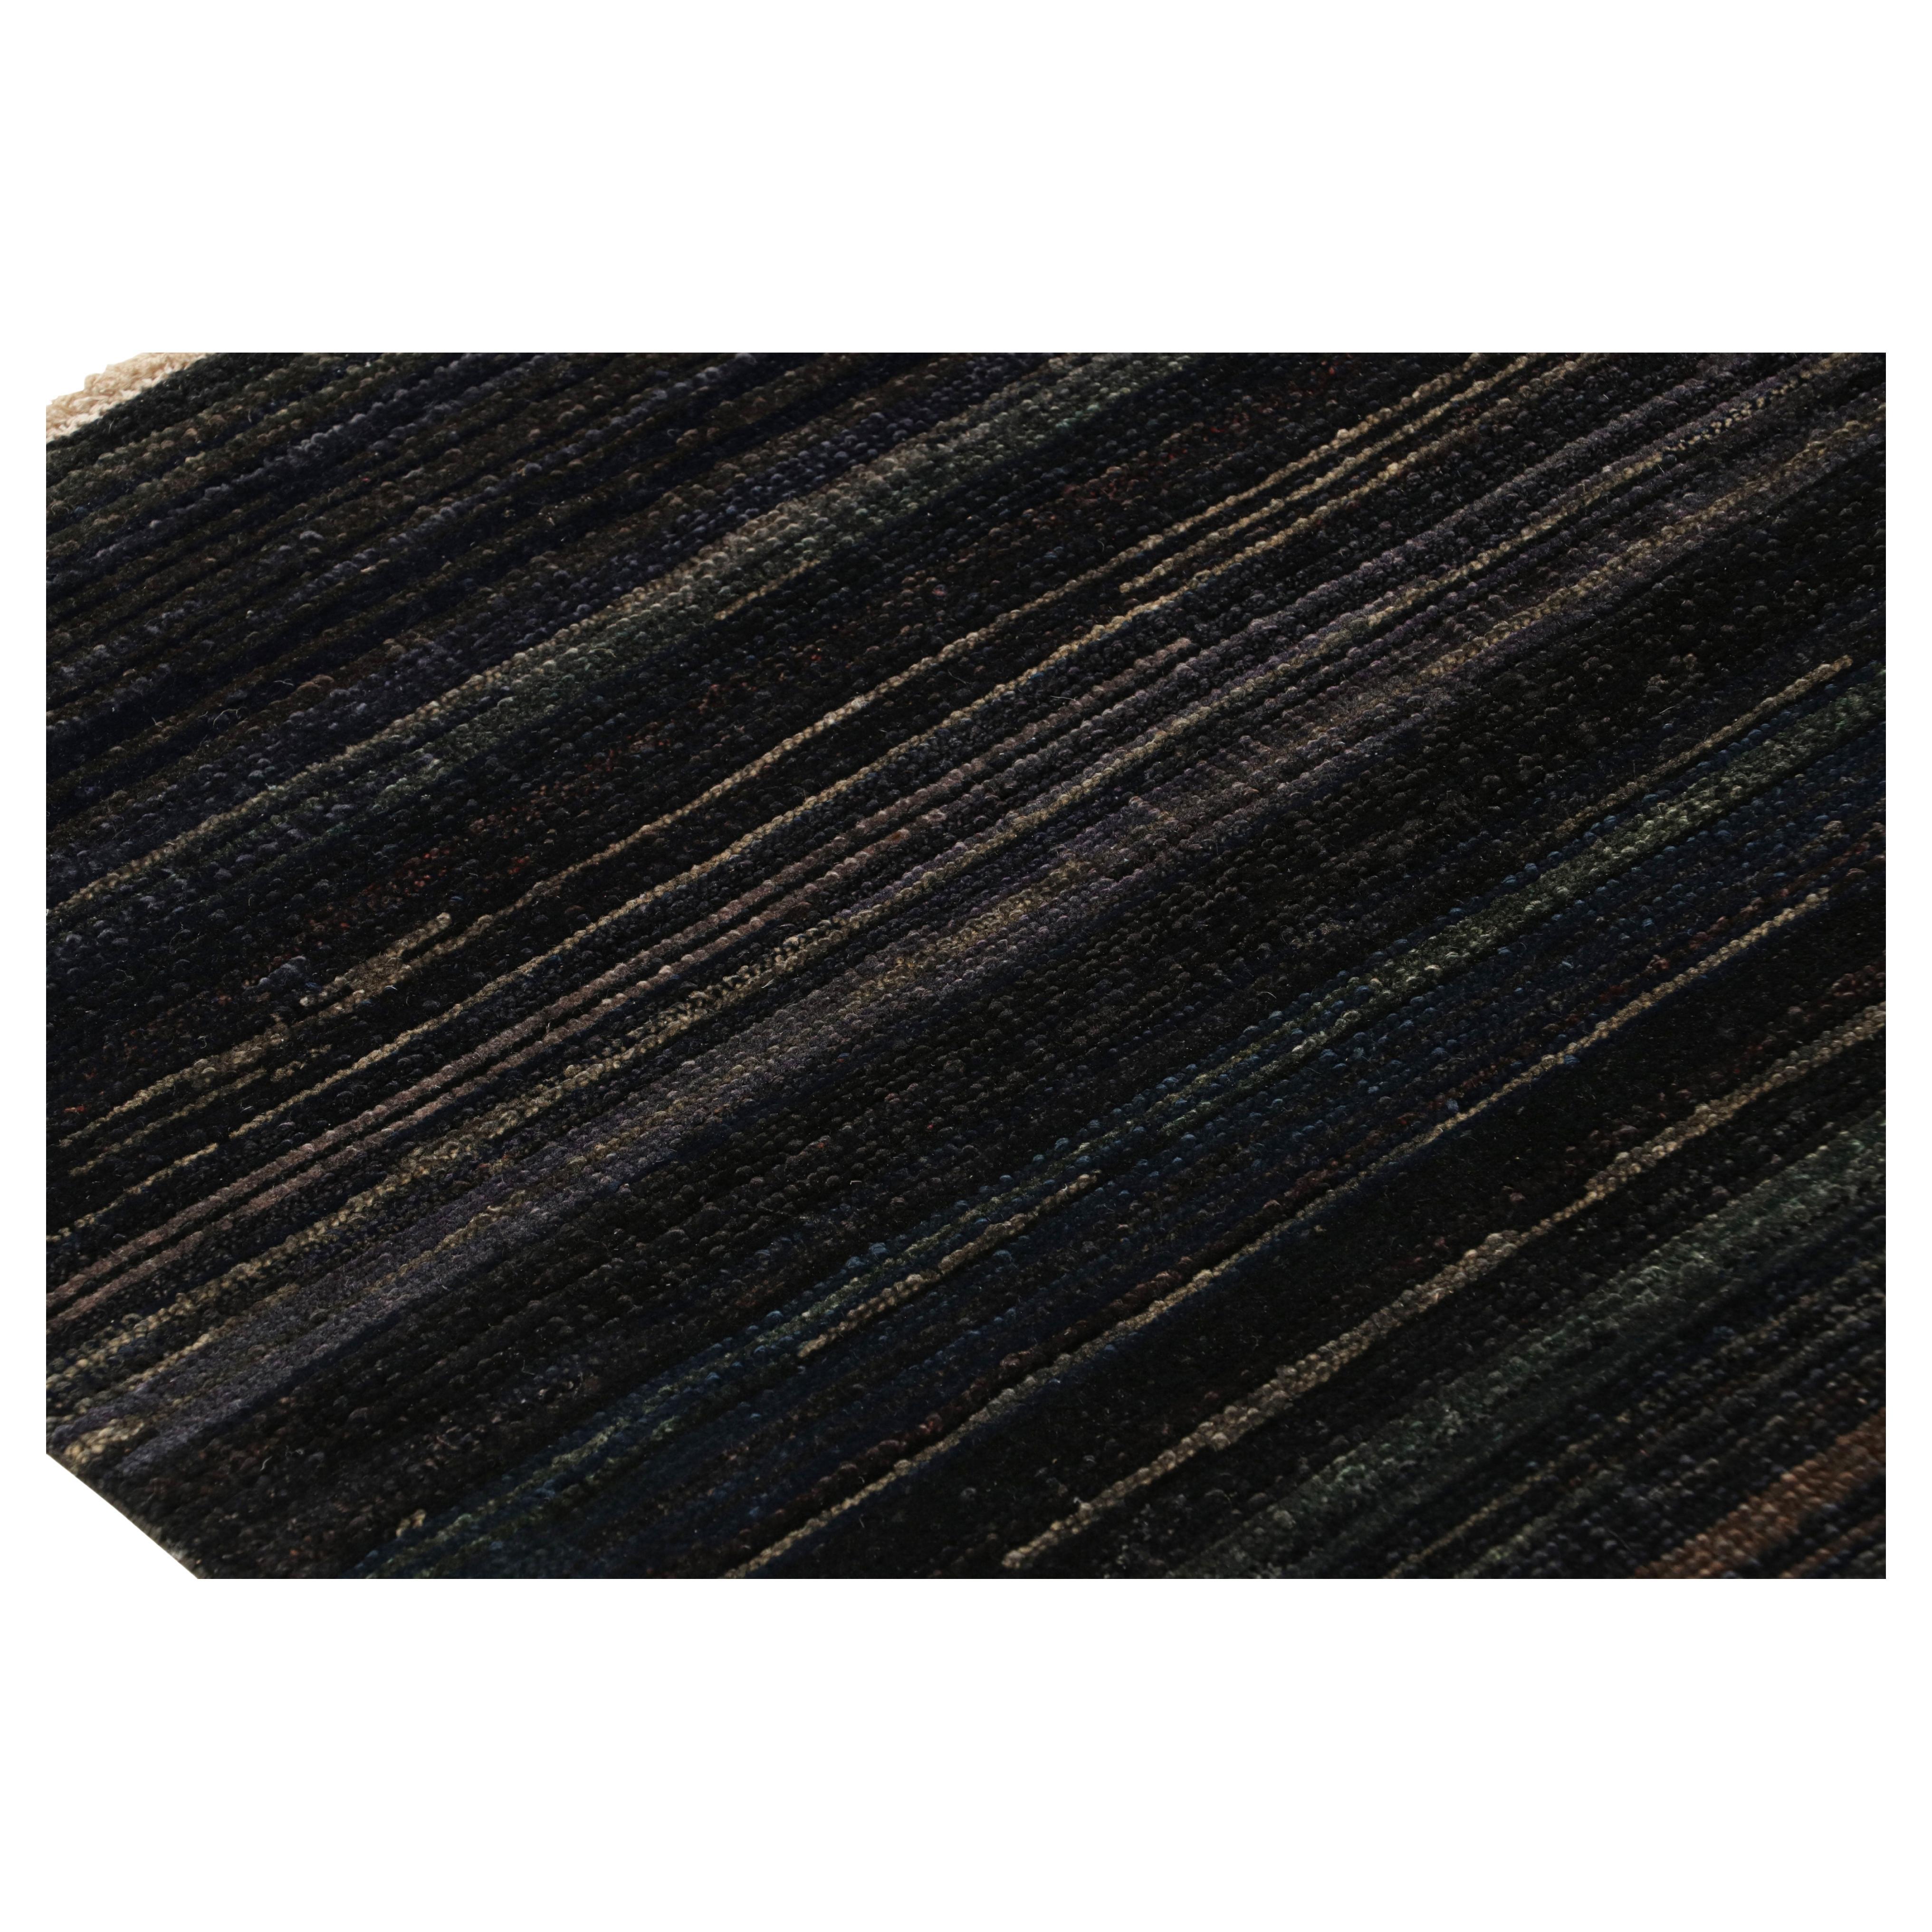 Rug & Kilim's Modern Textural Rug in Dark Blue and Grisailles Stripes and Striae (tapis texturé moderne en bleu foncé et rayures grises)